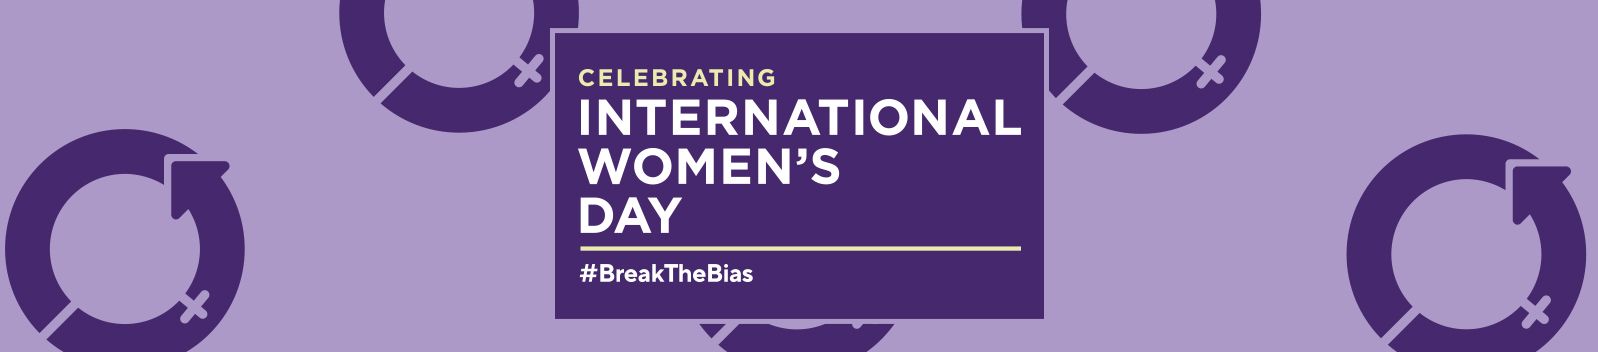 Celebrating International Women's Day  #BreakTheBias